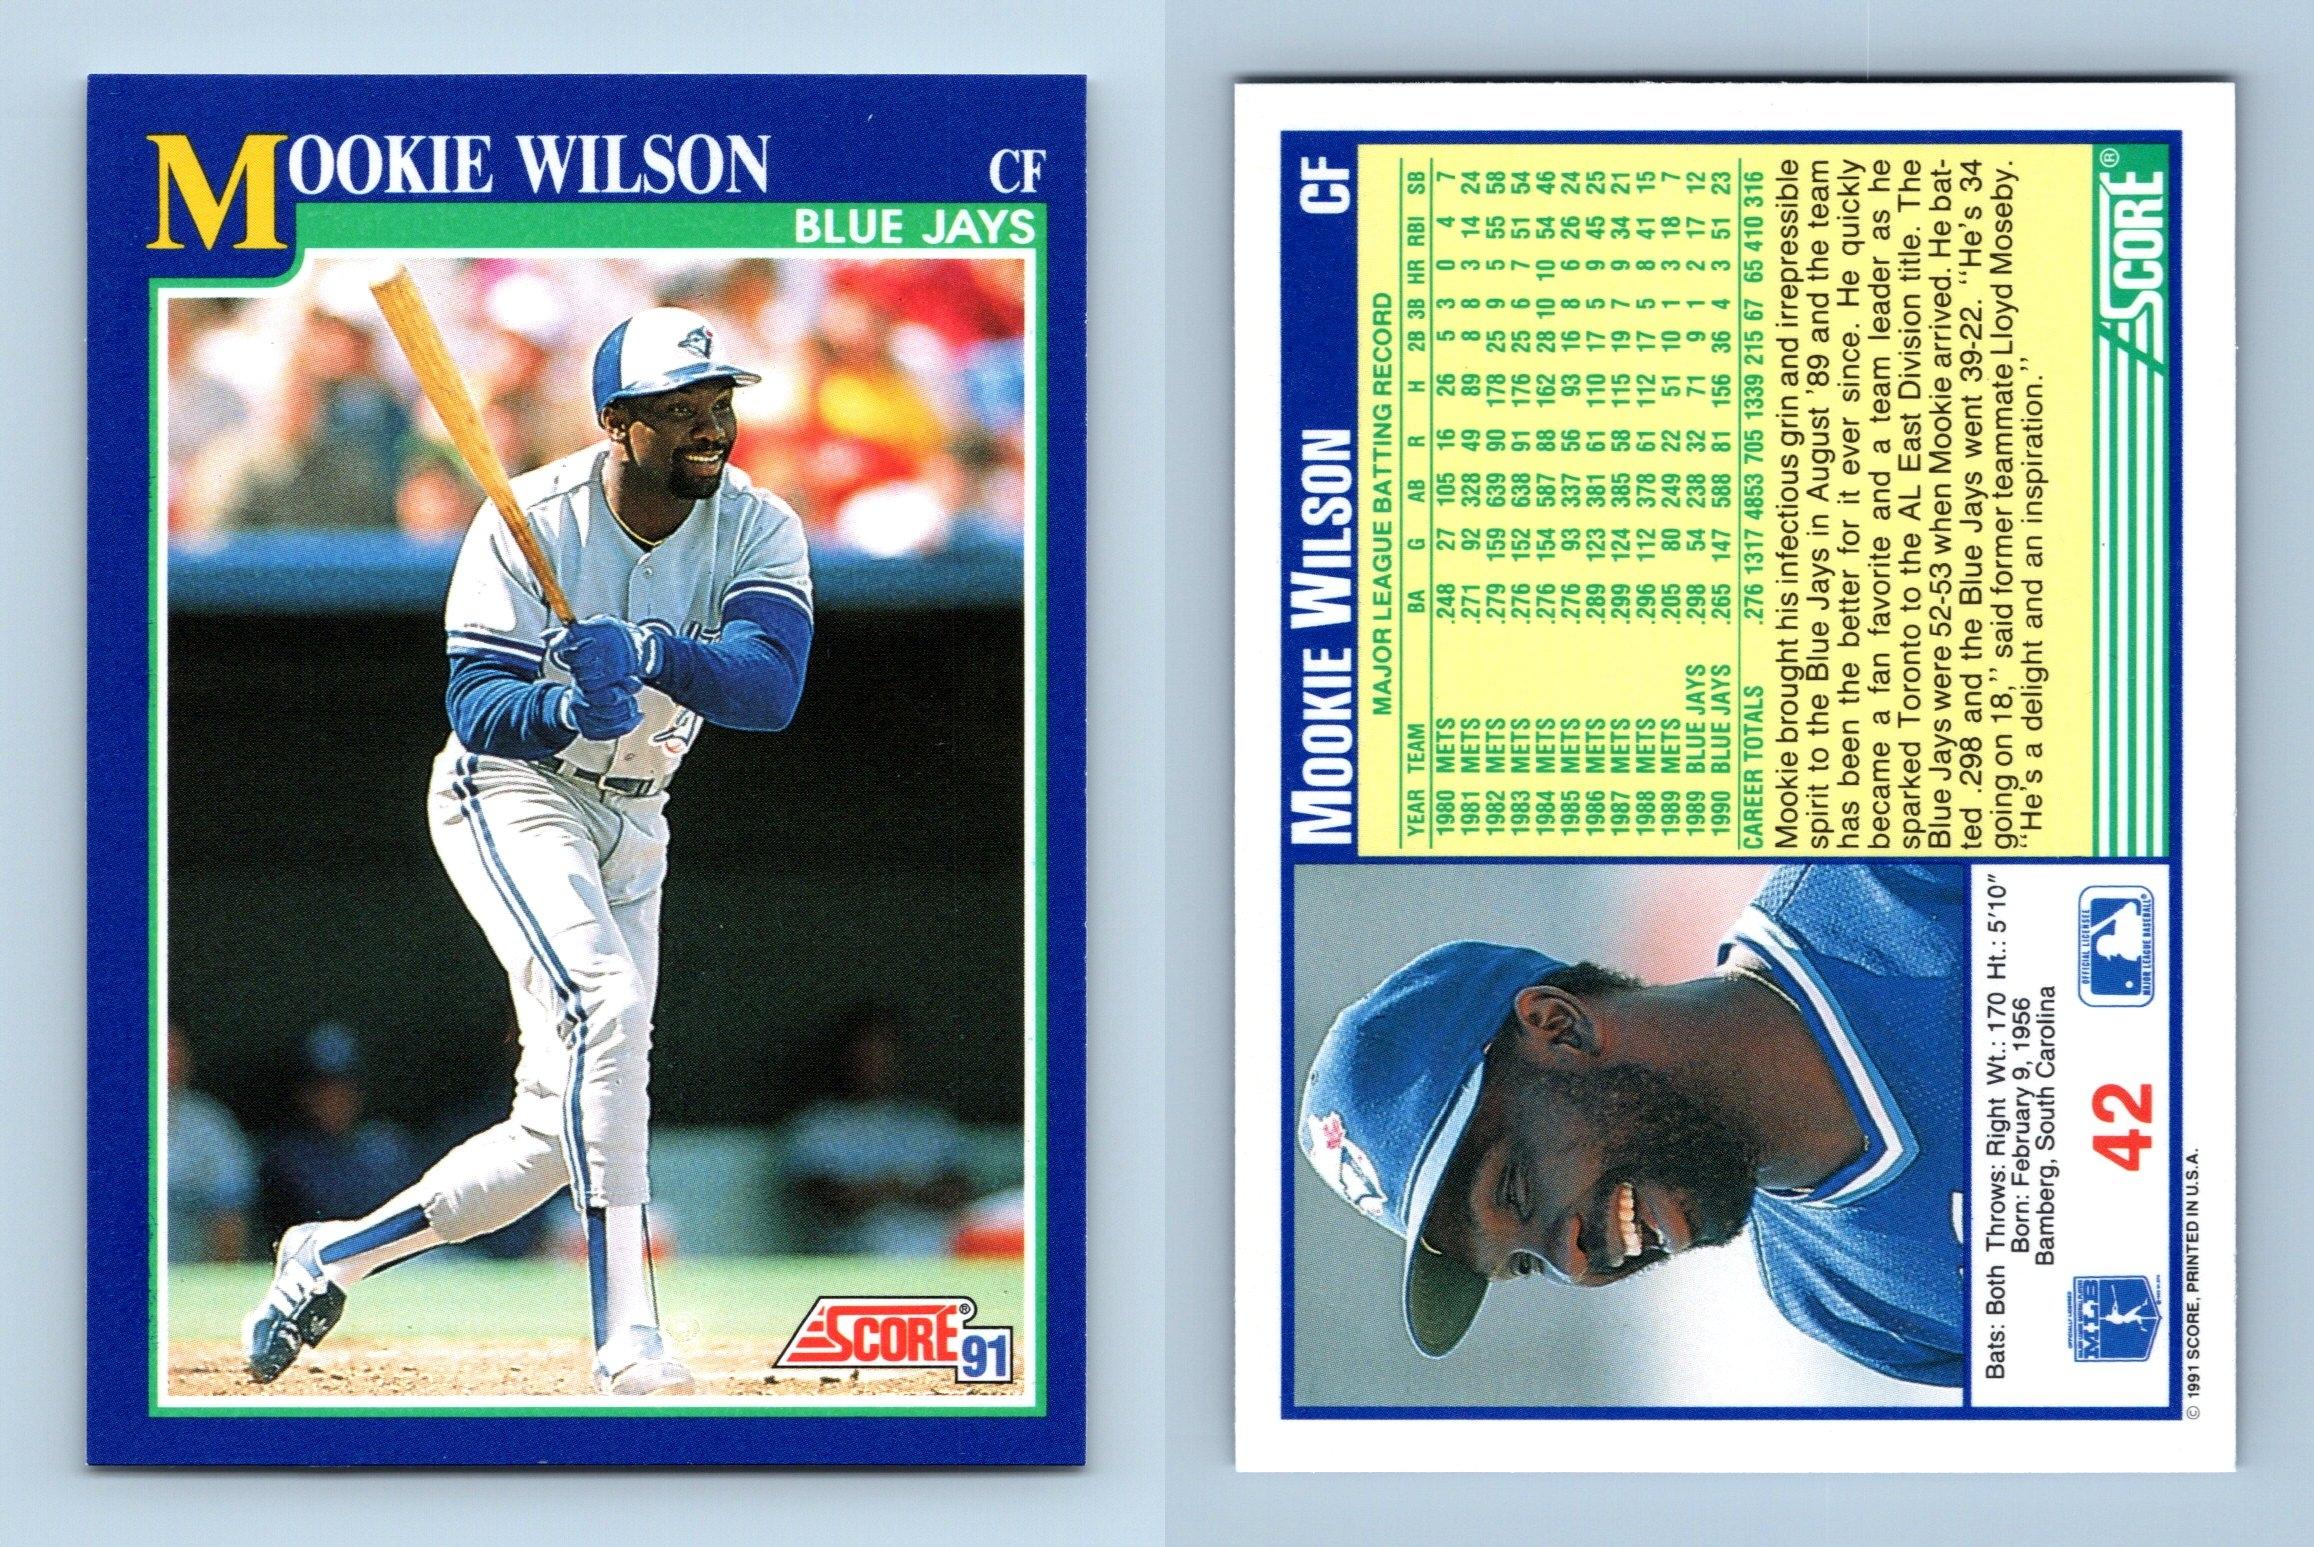 wilson baseball card